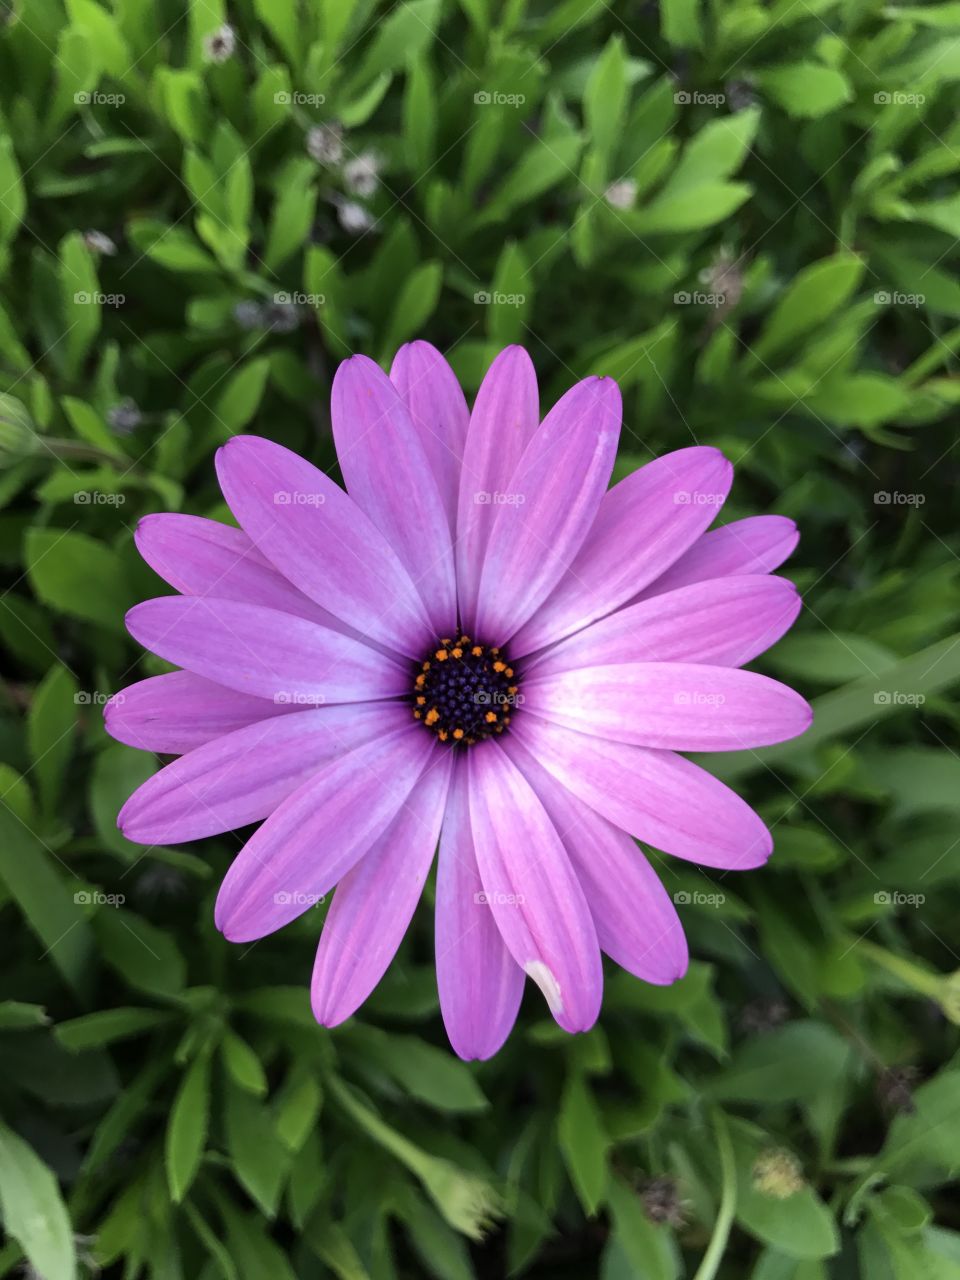 Beautiful pink daisy in full bloom